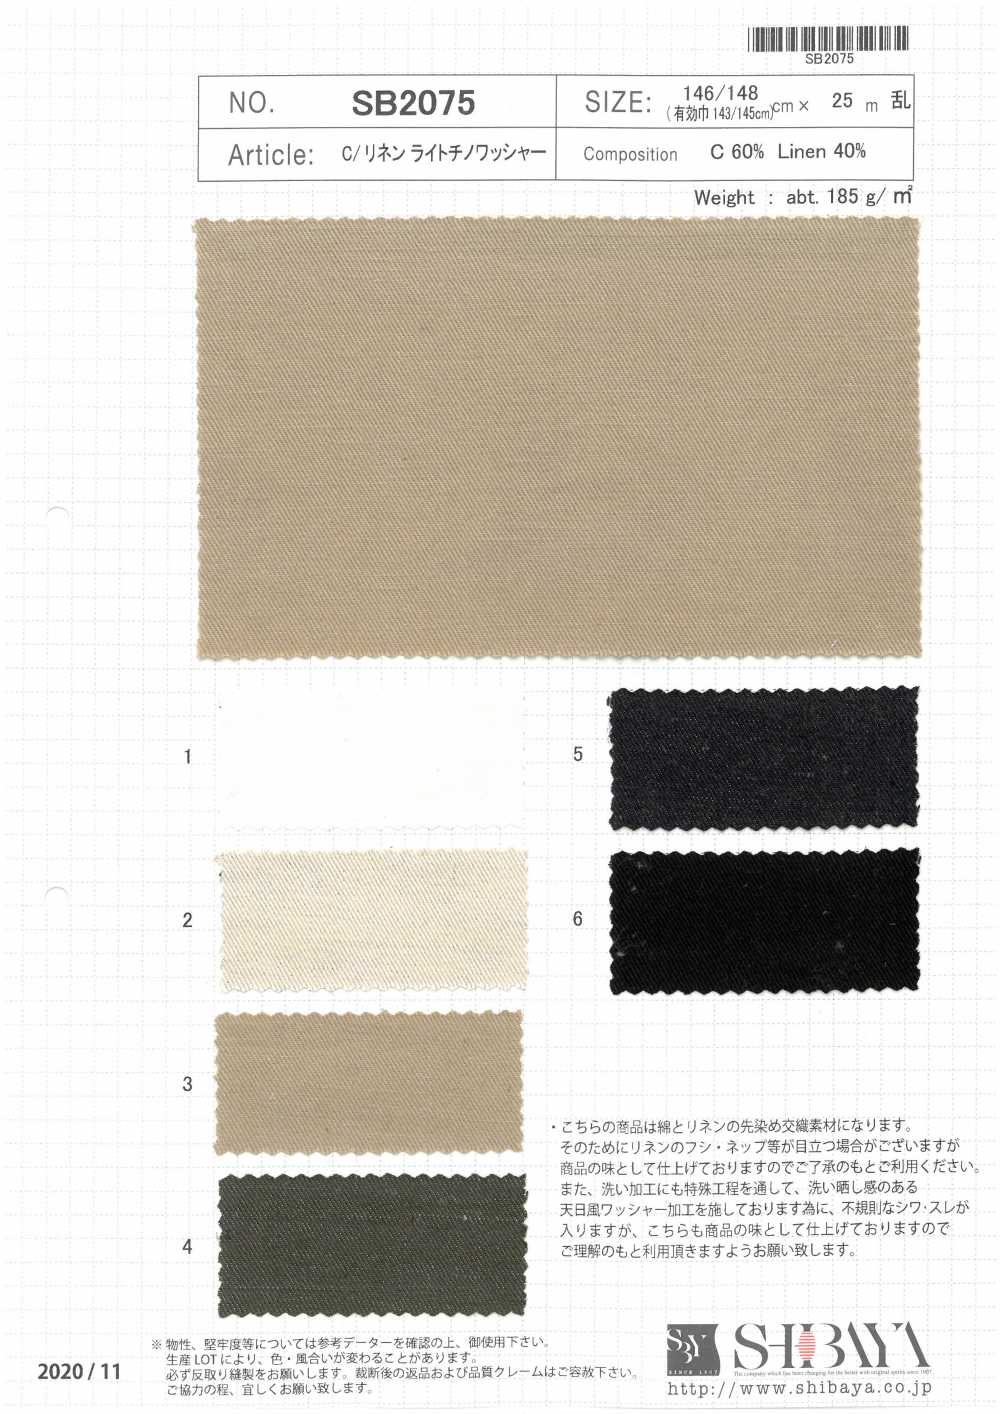 SB2075 C / Linen Light Chino Lavadora Procesamiento[Fabrica Textil] SHIBAYA